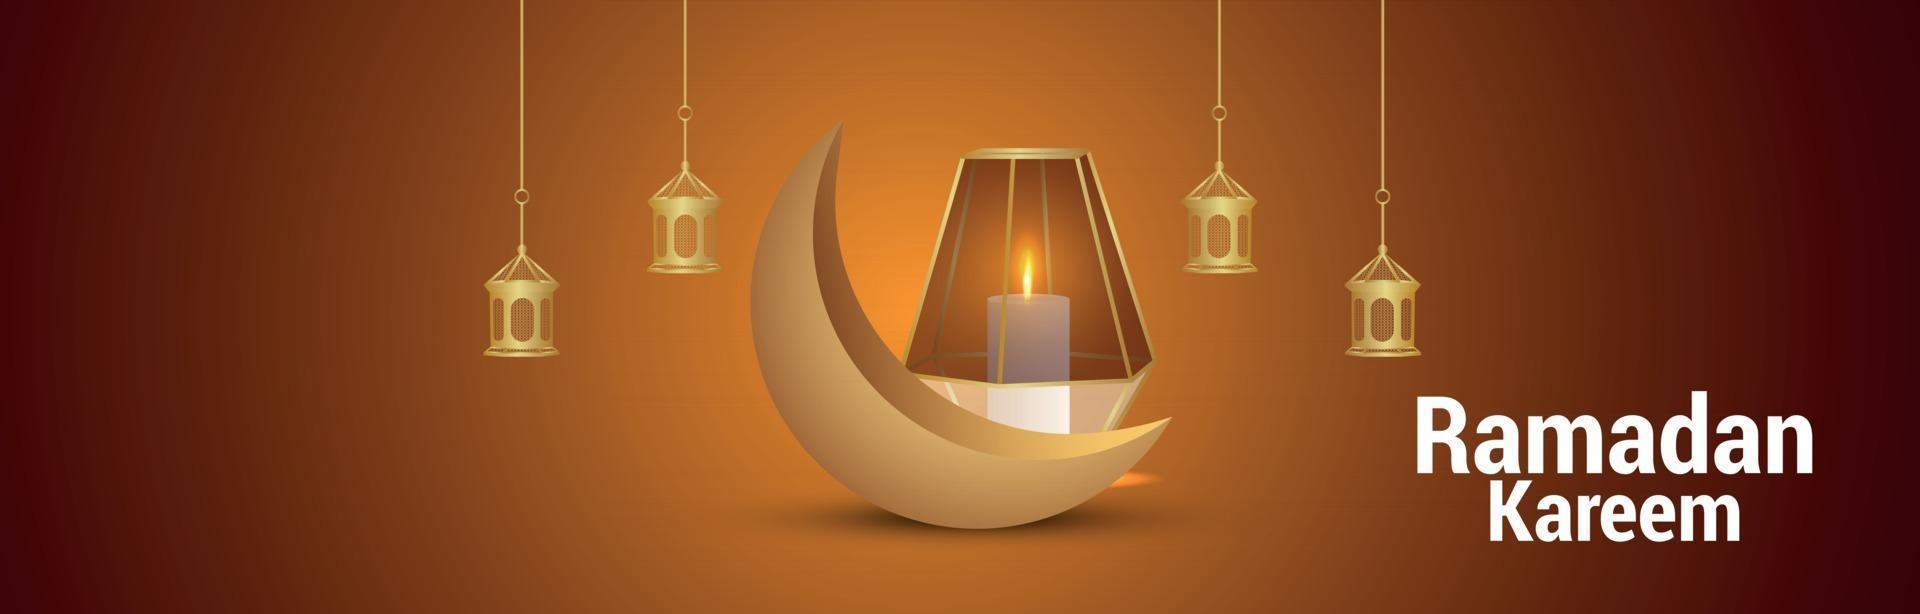 Ramadan Kareem islamisches Festival Banner oder Header mit kreativer Illustration vektor